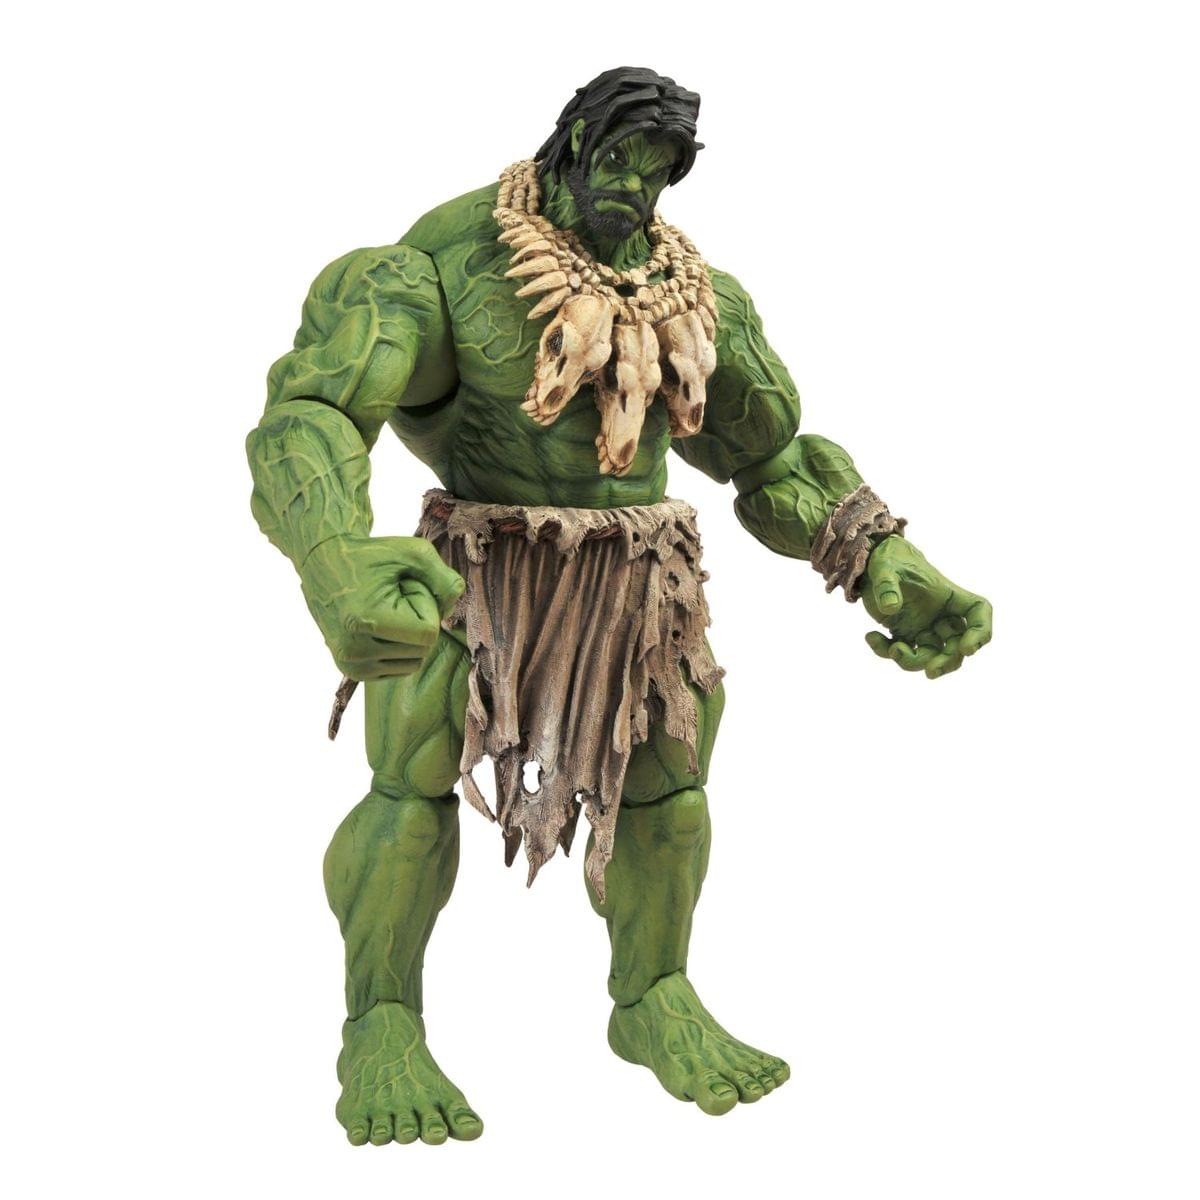 Marvel Select Barbarian Hulk Action Figure